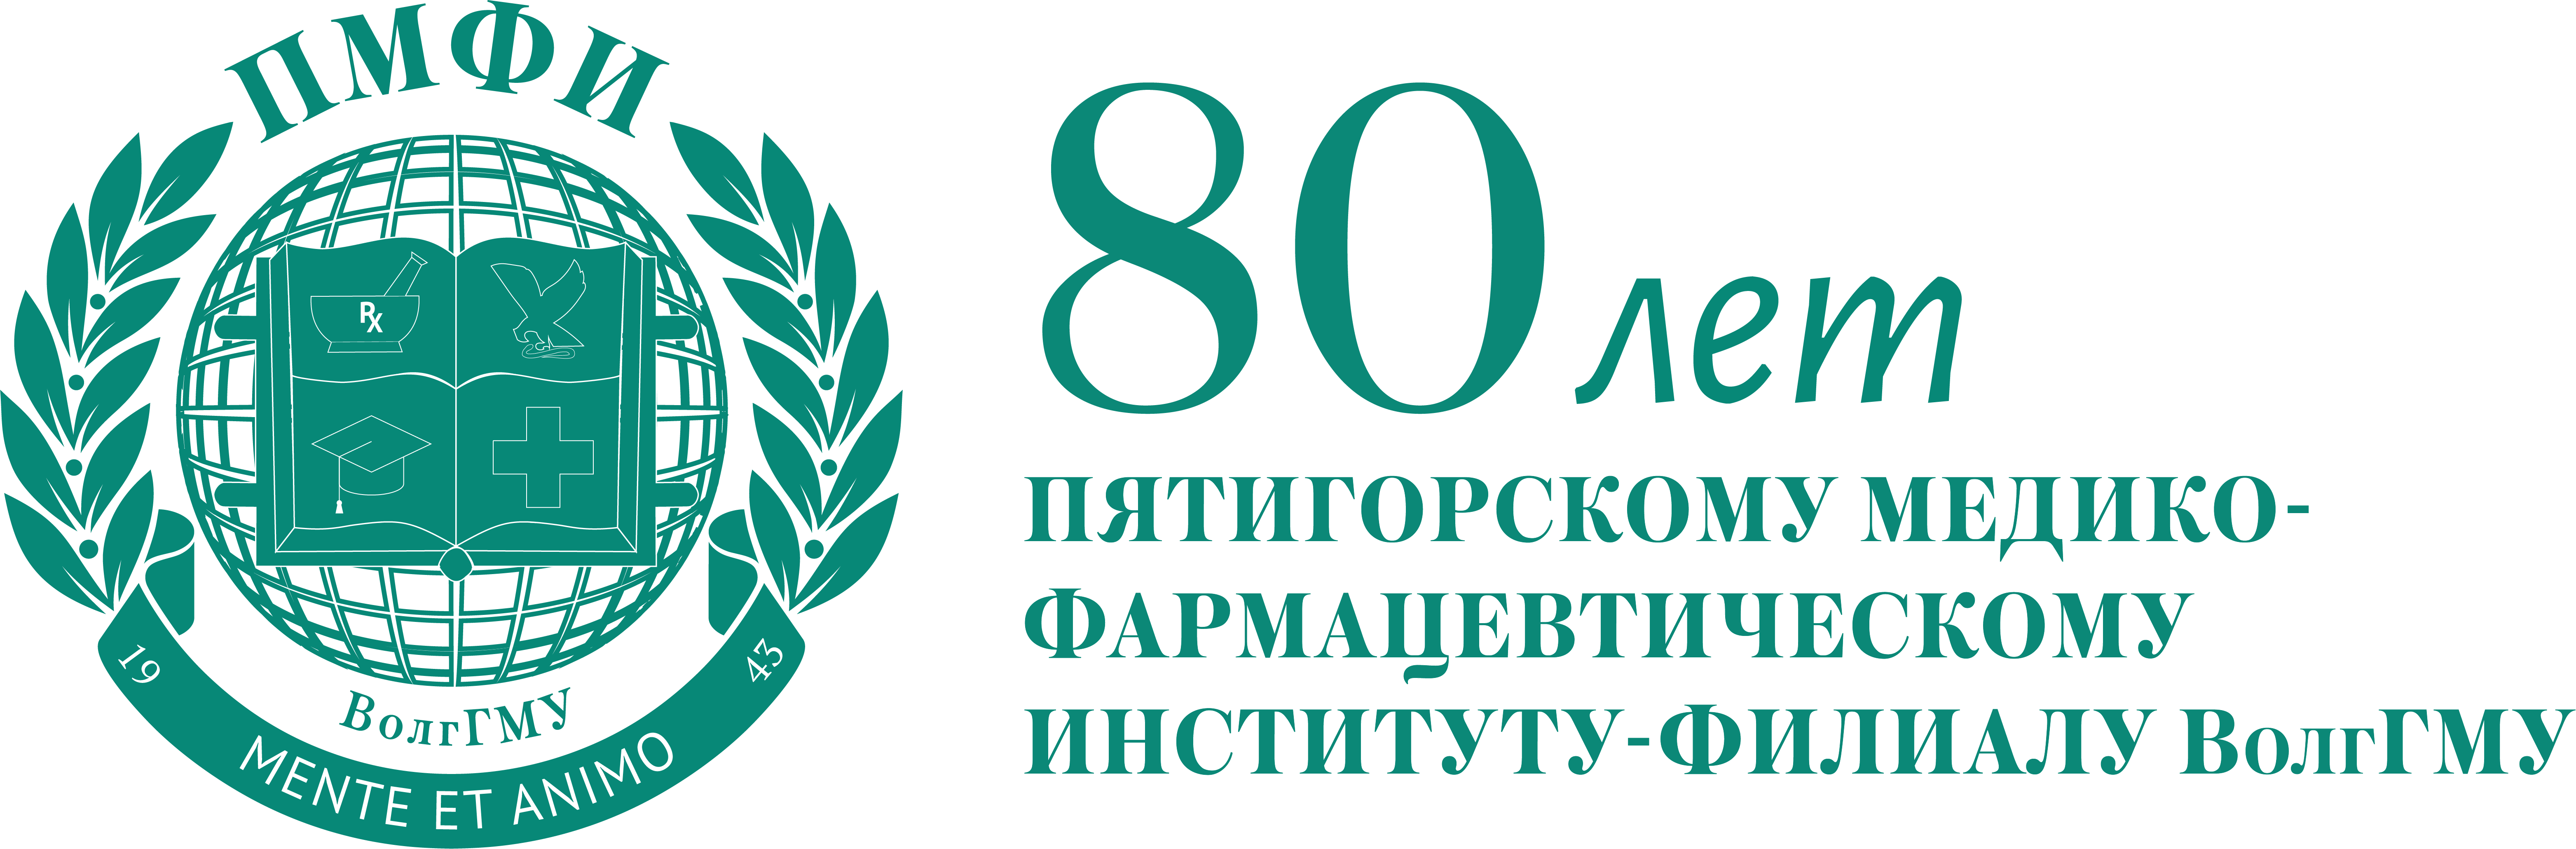 Pyatigorsk Medical and Pharmaceutical Institute logo